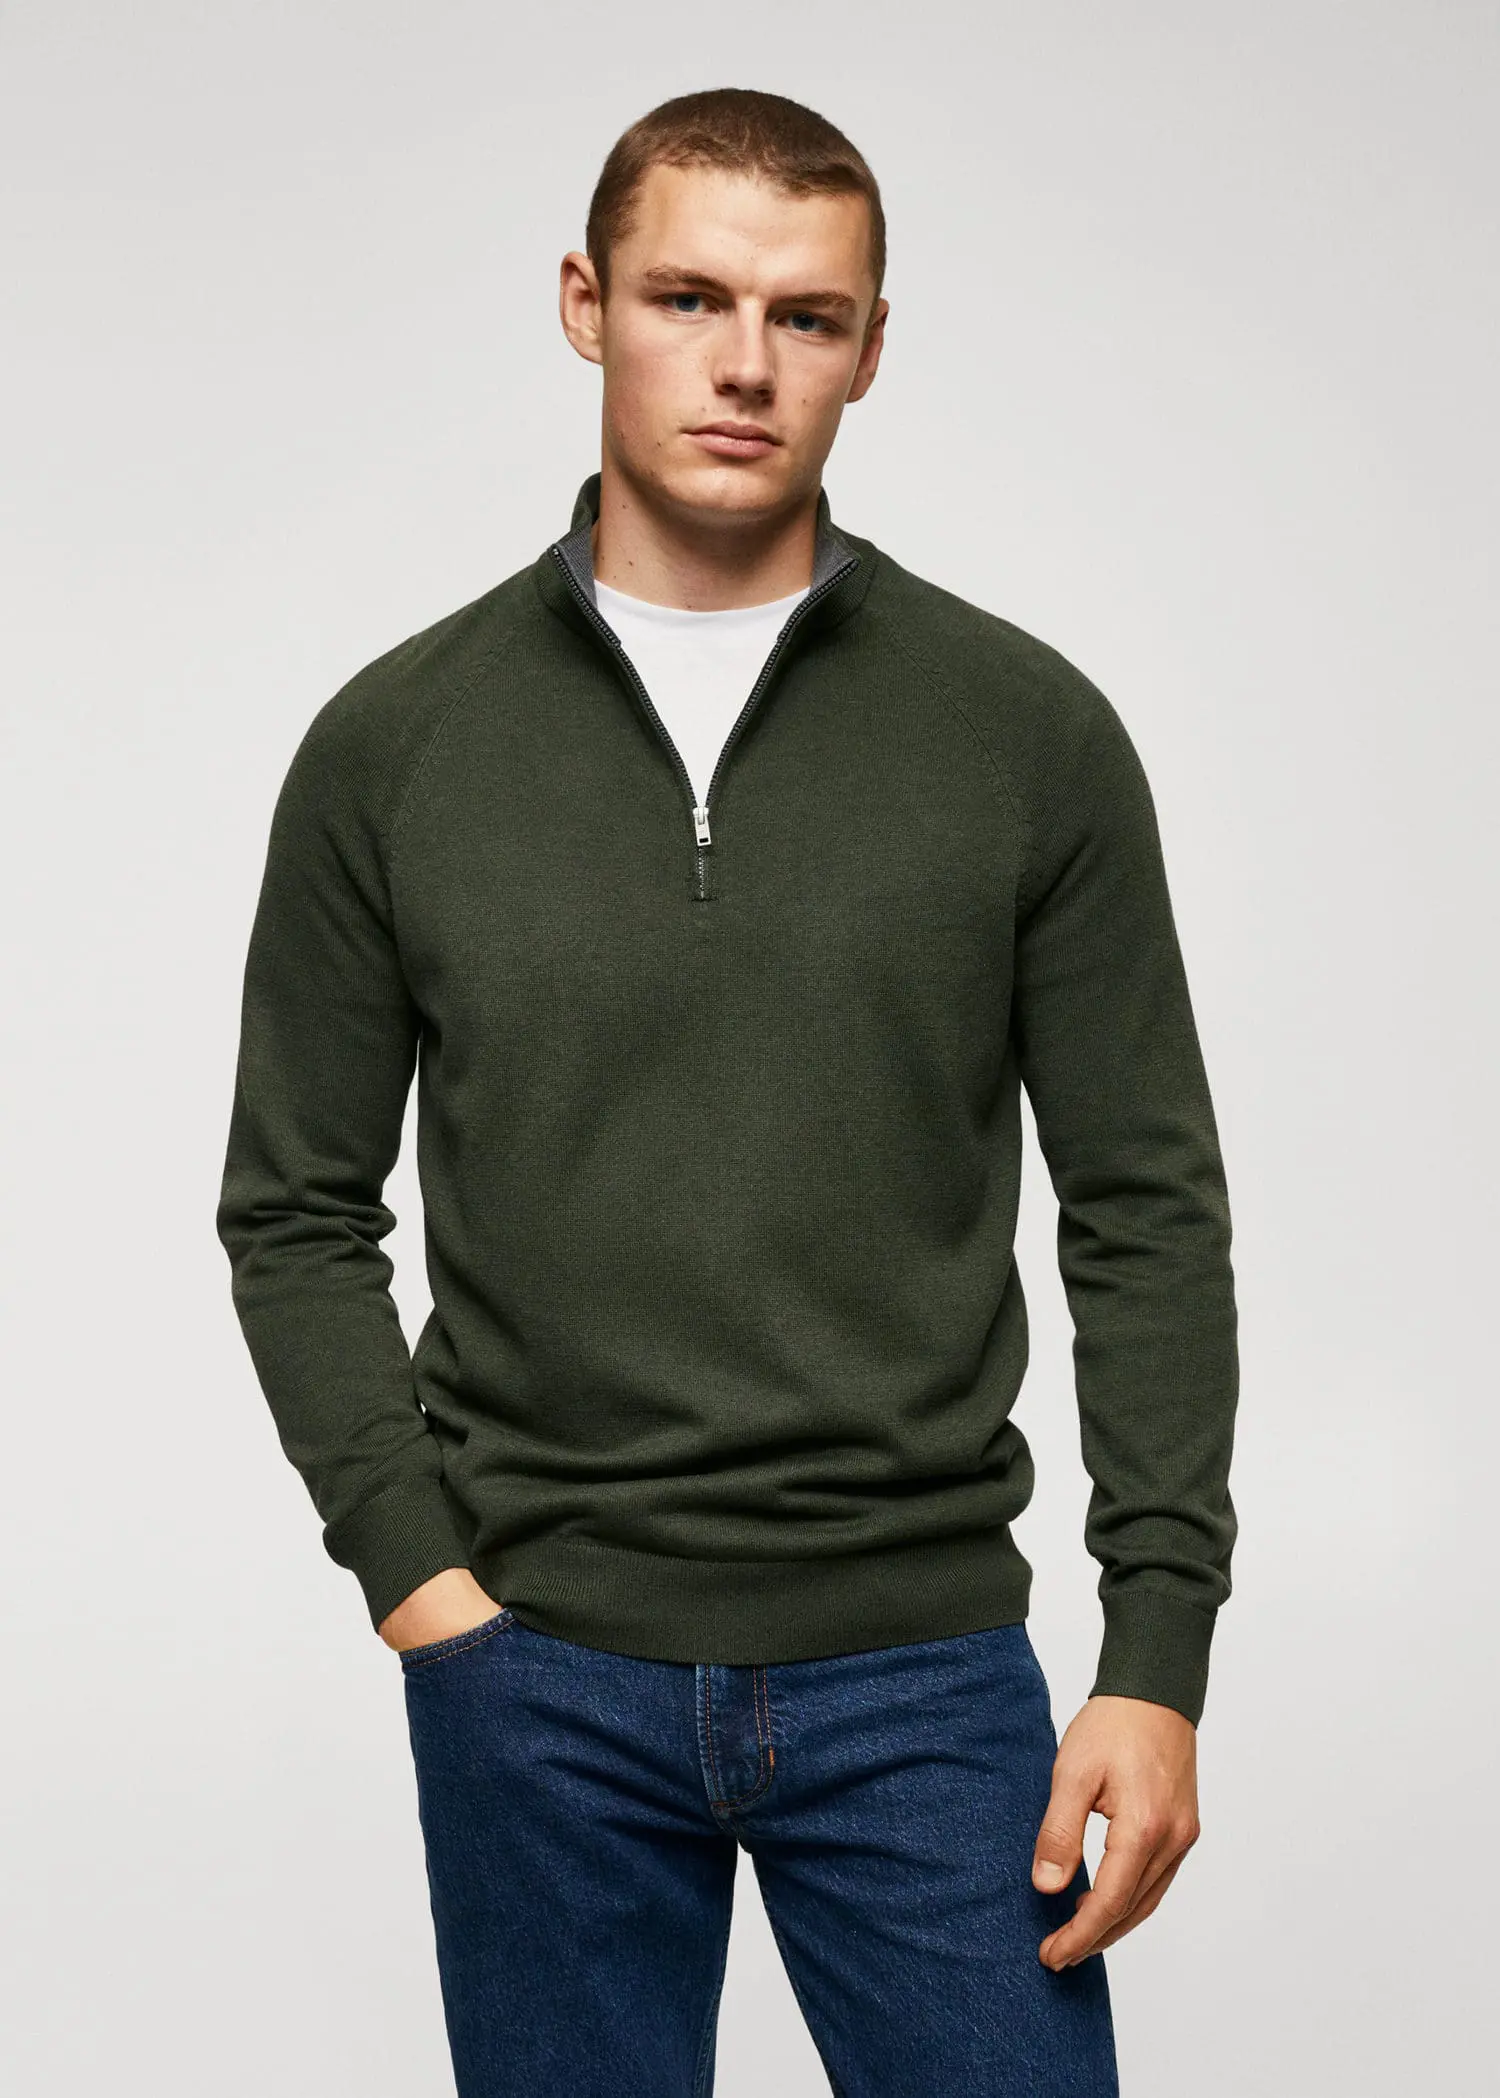 Mango Cotton sweater with neck zip. 1